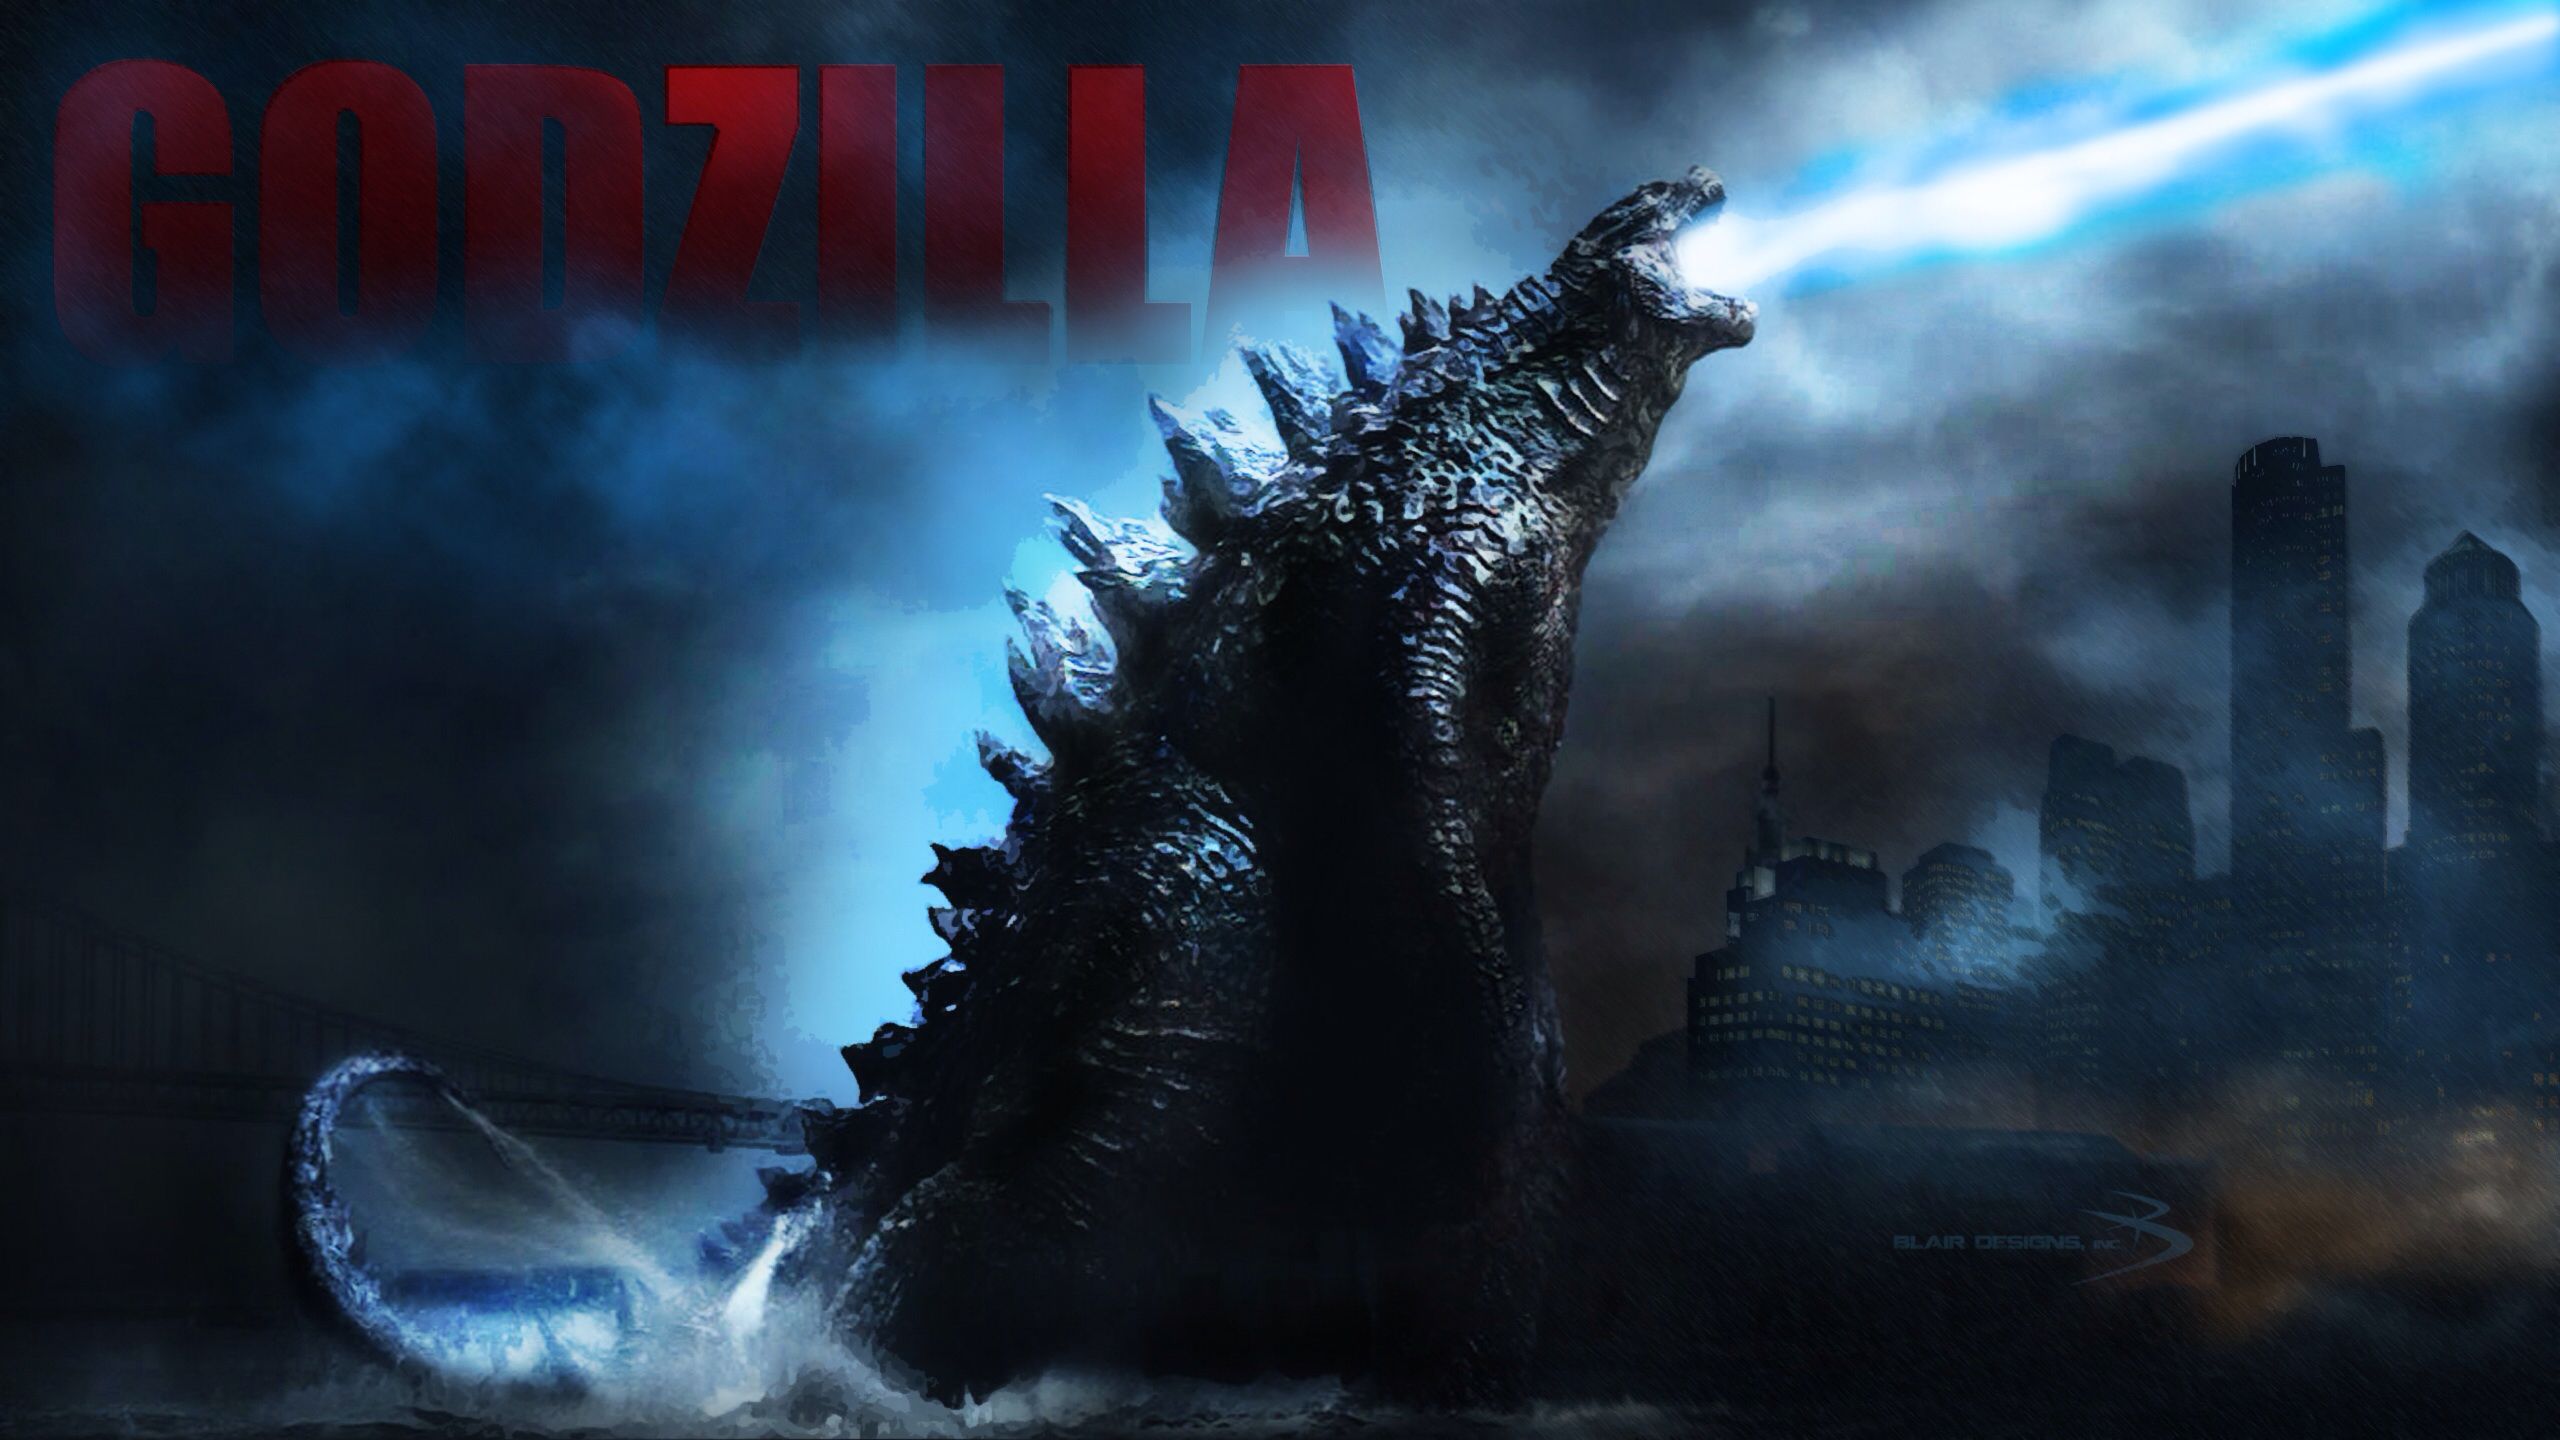 Godzilla: Atomic Breath Digital Illustration Photohop CC. Godzilla, Kaiju, Digital illustration